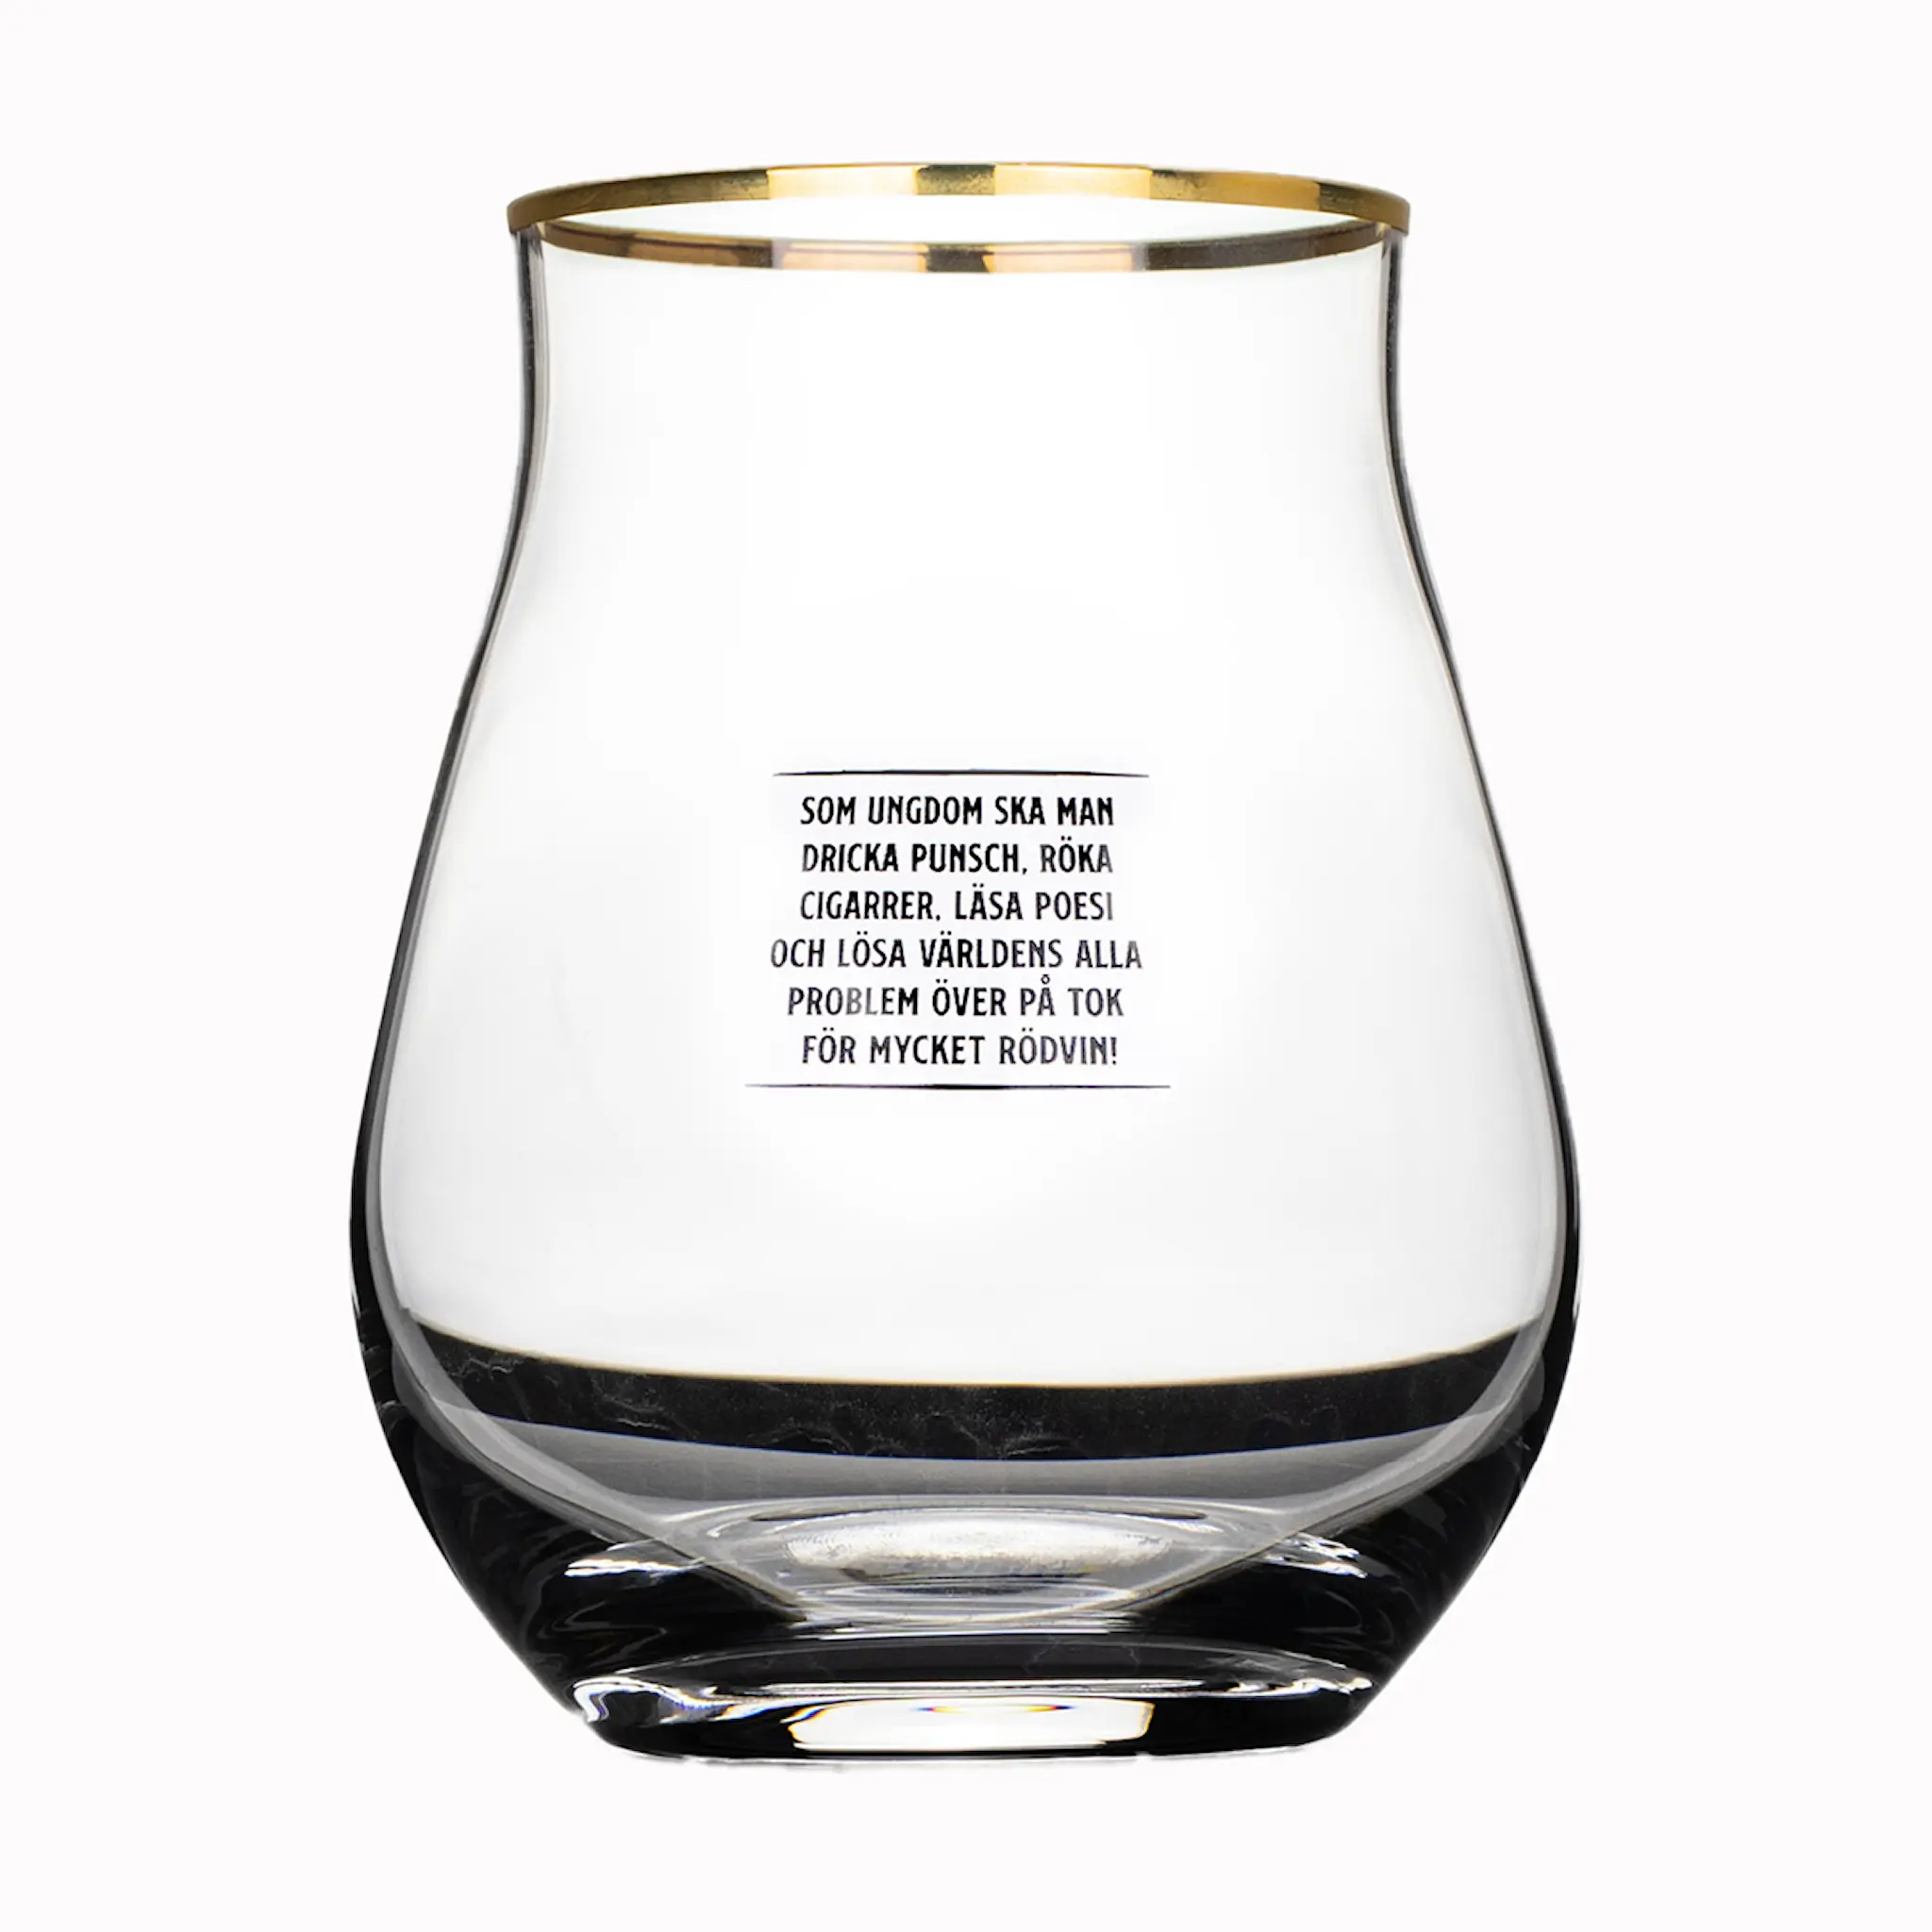 Edward Blom Whiskyglas / Tastingglas 42 cl Som ungdom ska